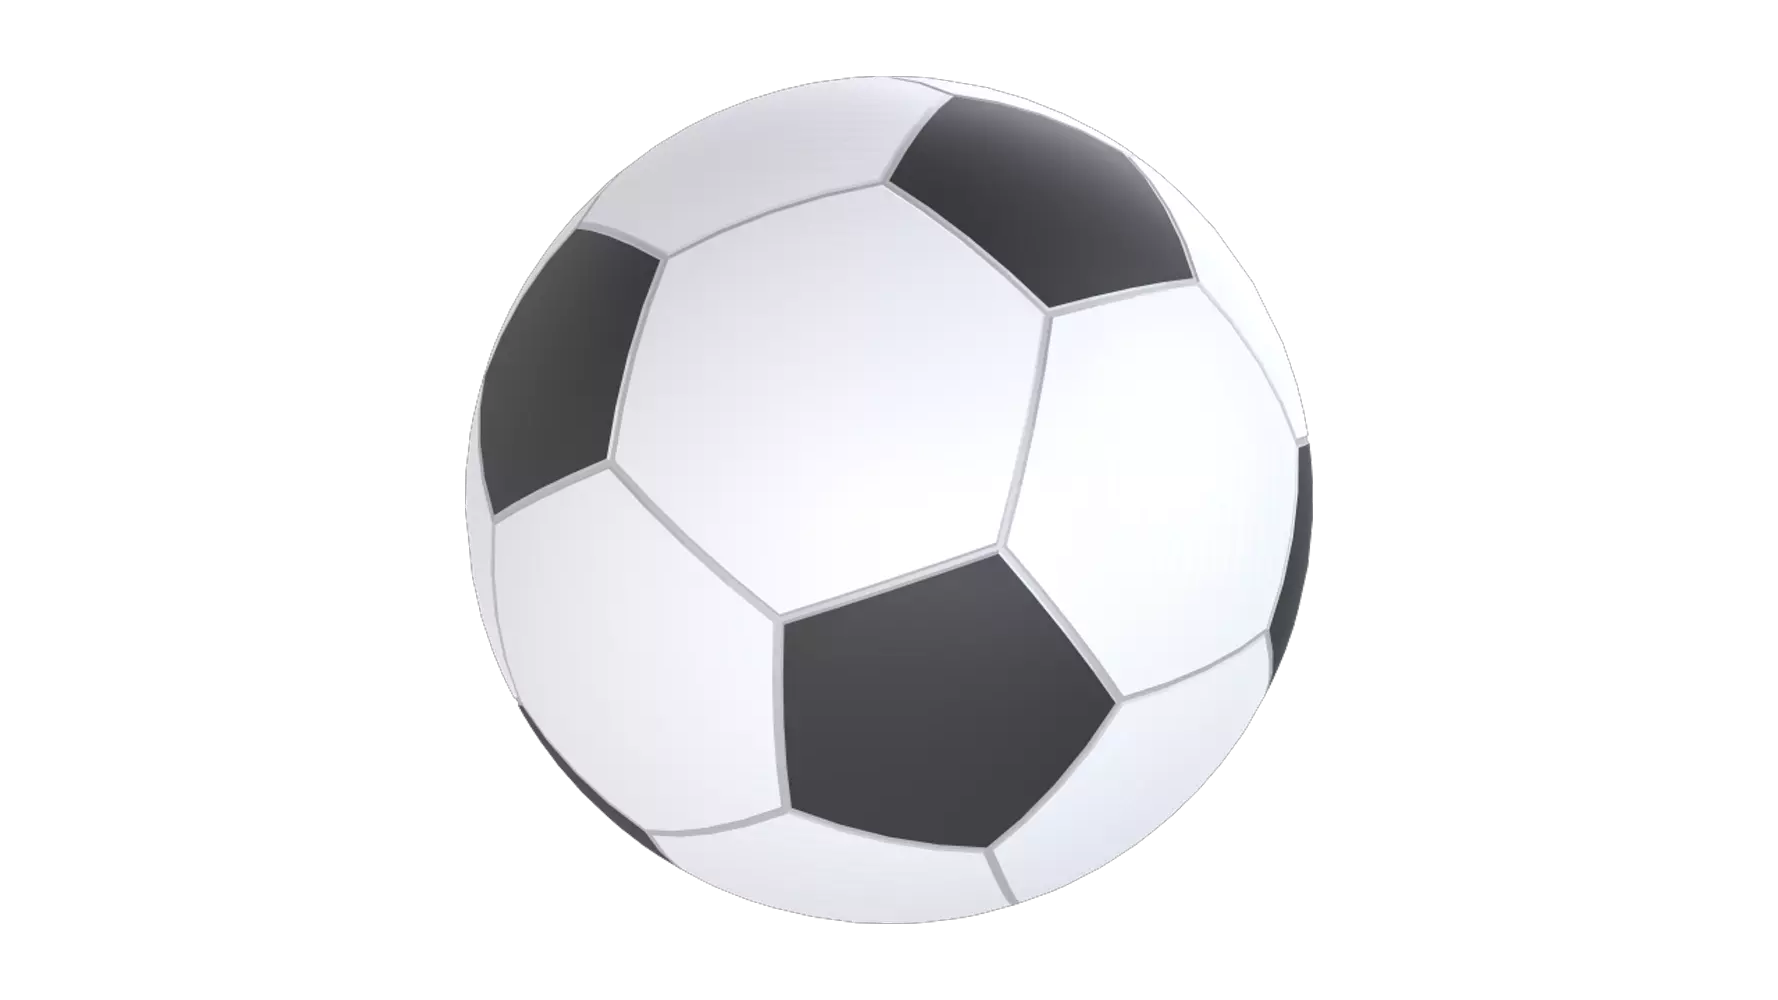 Football 3d model--edc765dc-4485-439b-9ac8-c588156a5b79